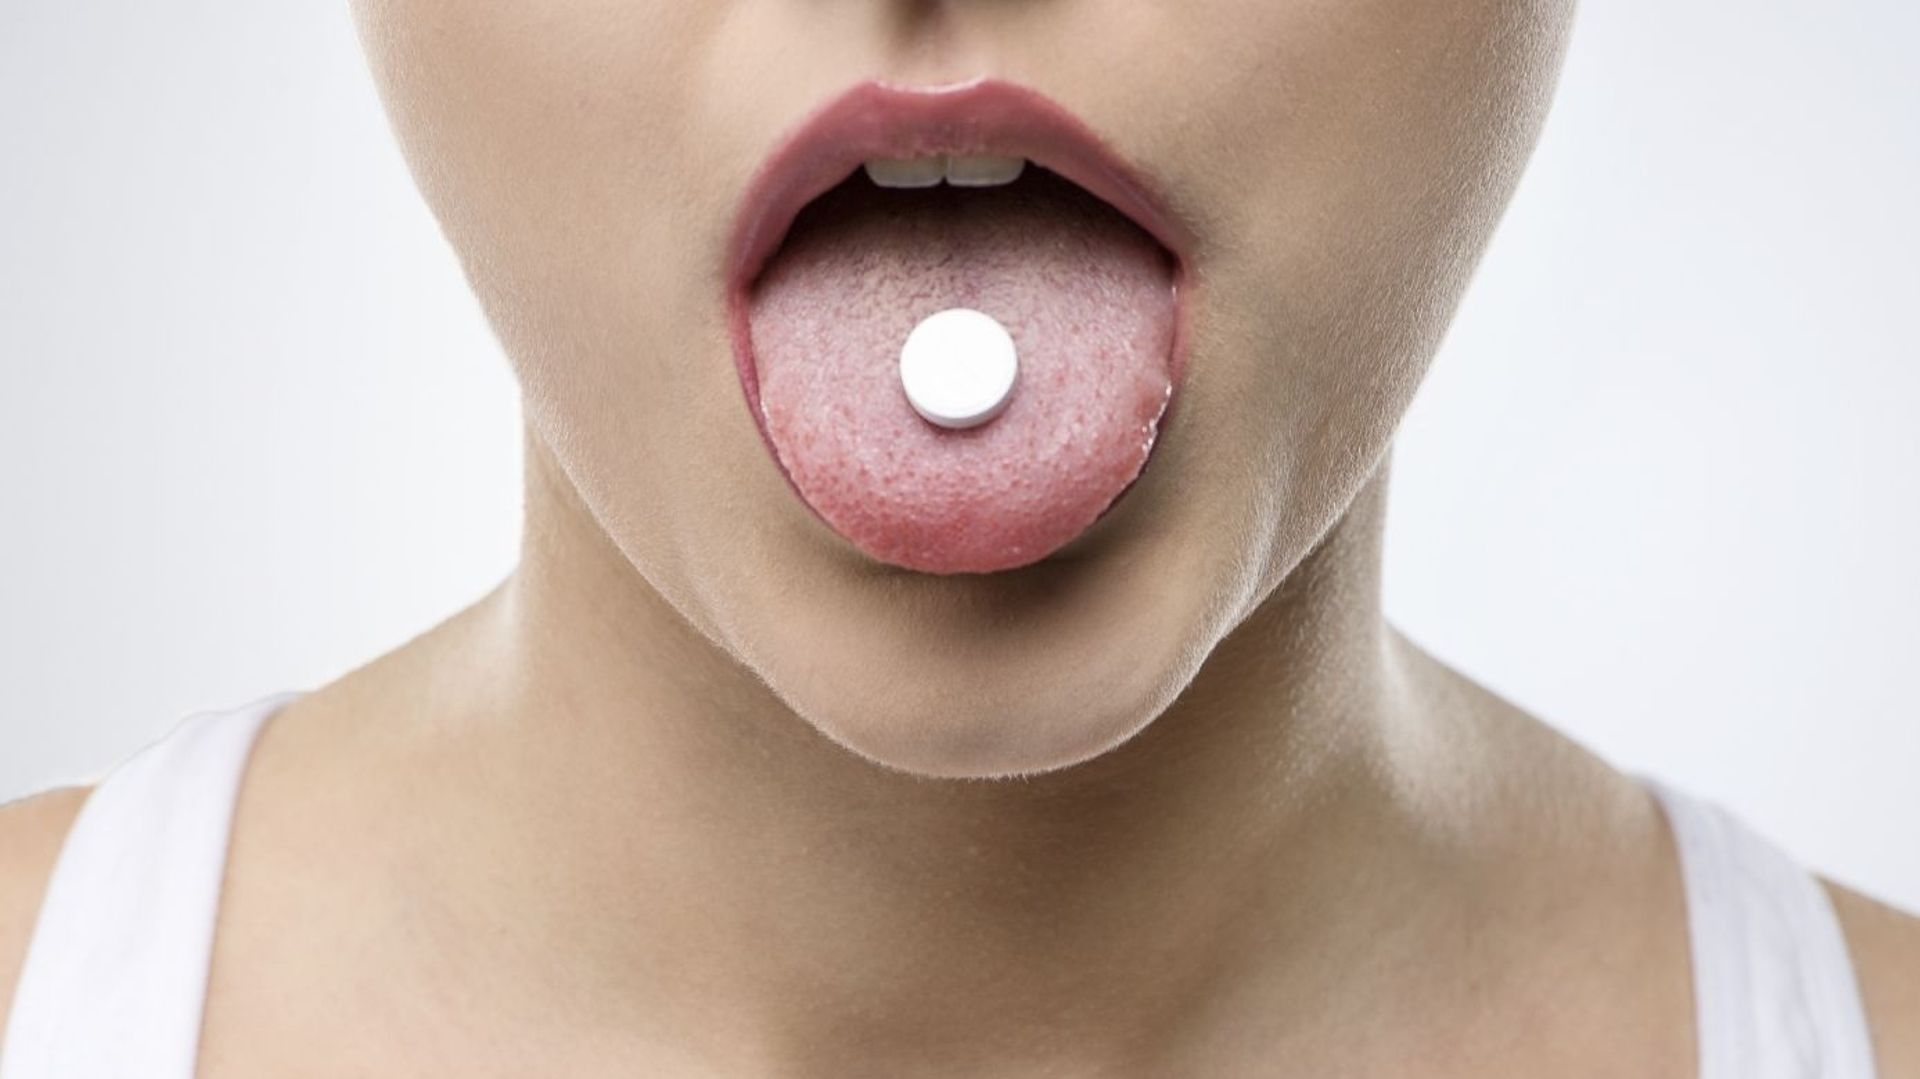 6 utilisations inhabituelles de l'aspirine